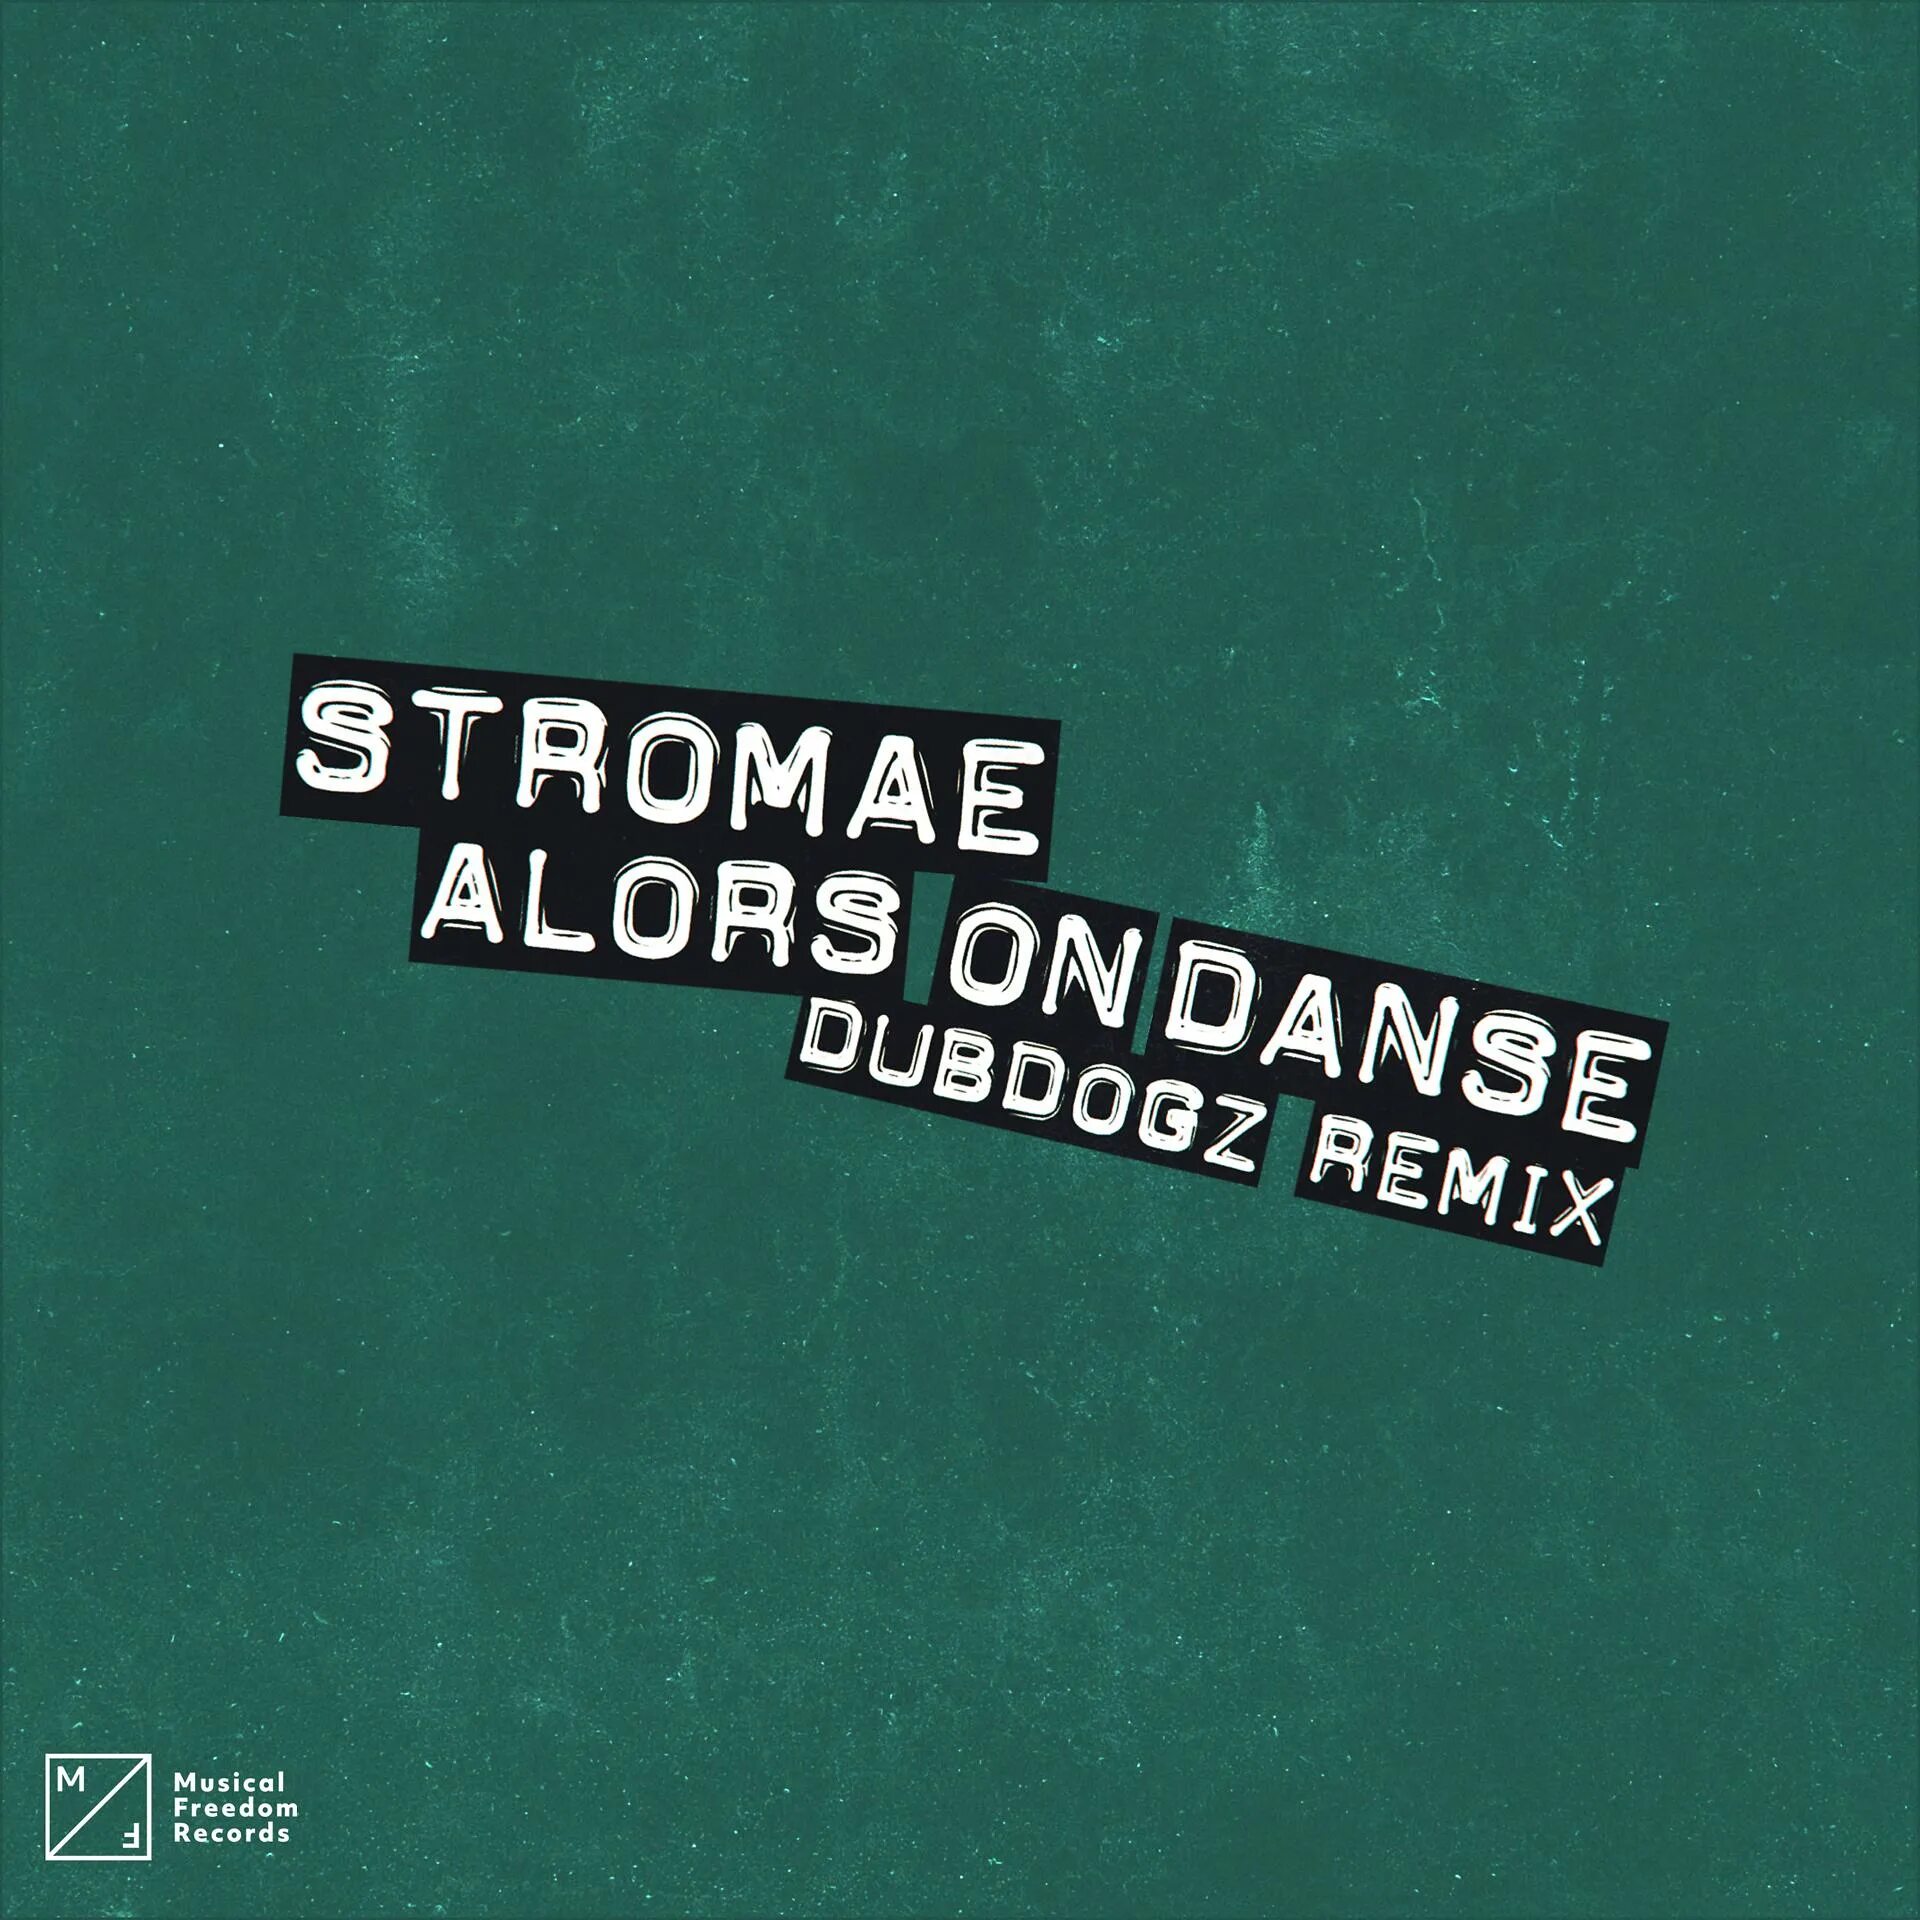 Stromae alors on danse remix. Stromae Alors on Danse обложка. Alors on Danse ремикс. Stromae Alors on Danse Dubdogz Remix Bass Boosted. Stromae Alors on Danse ремикс.